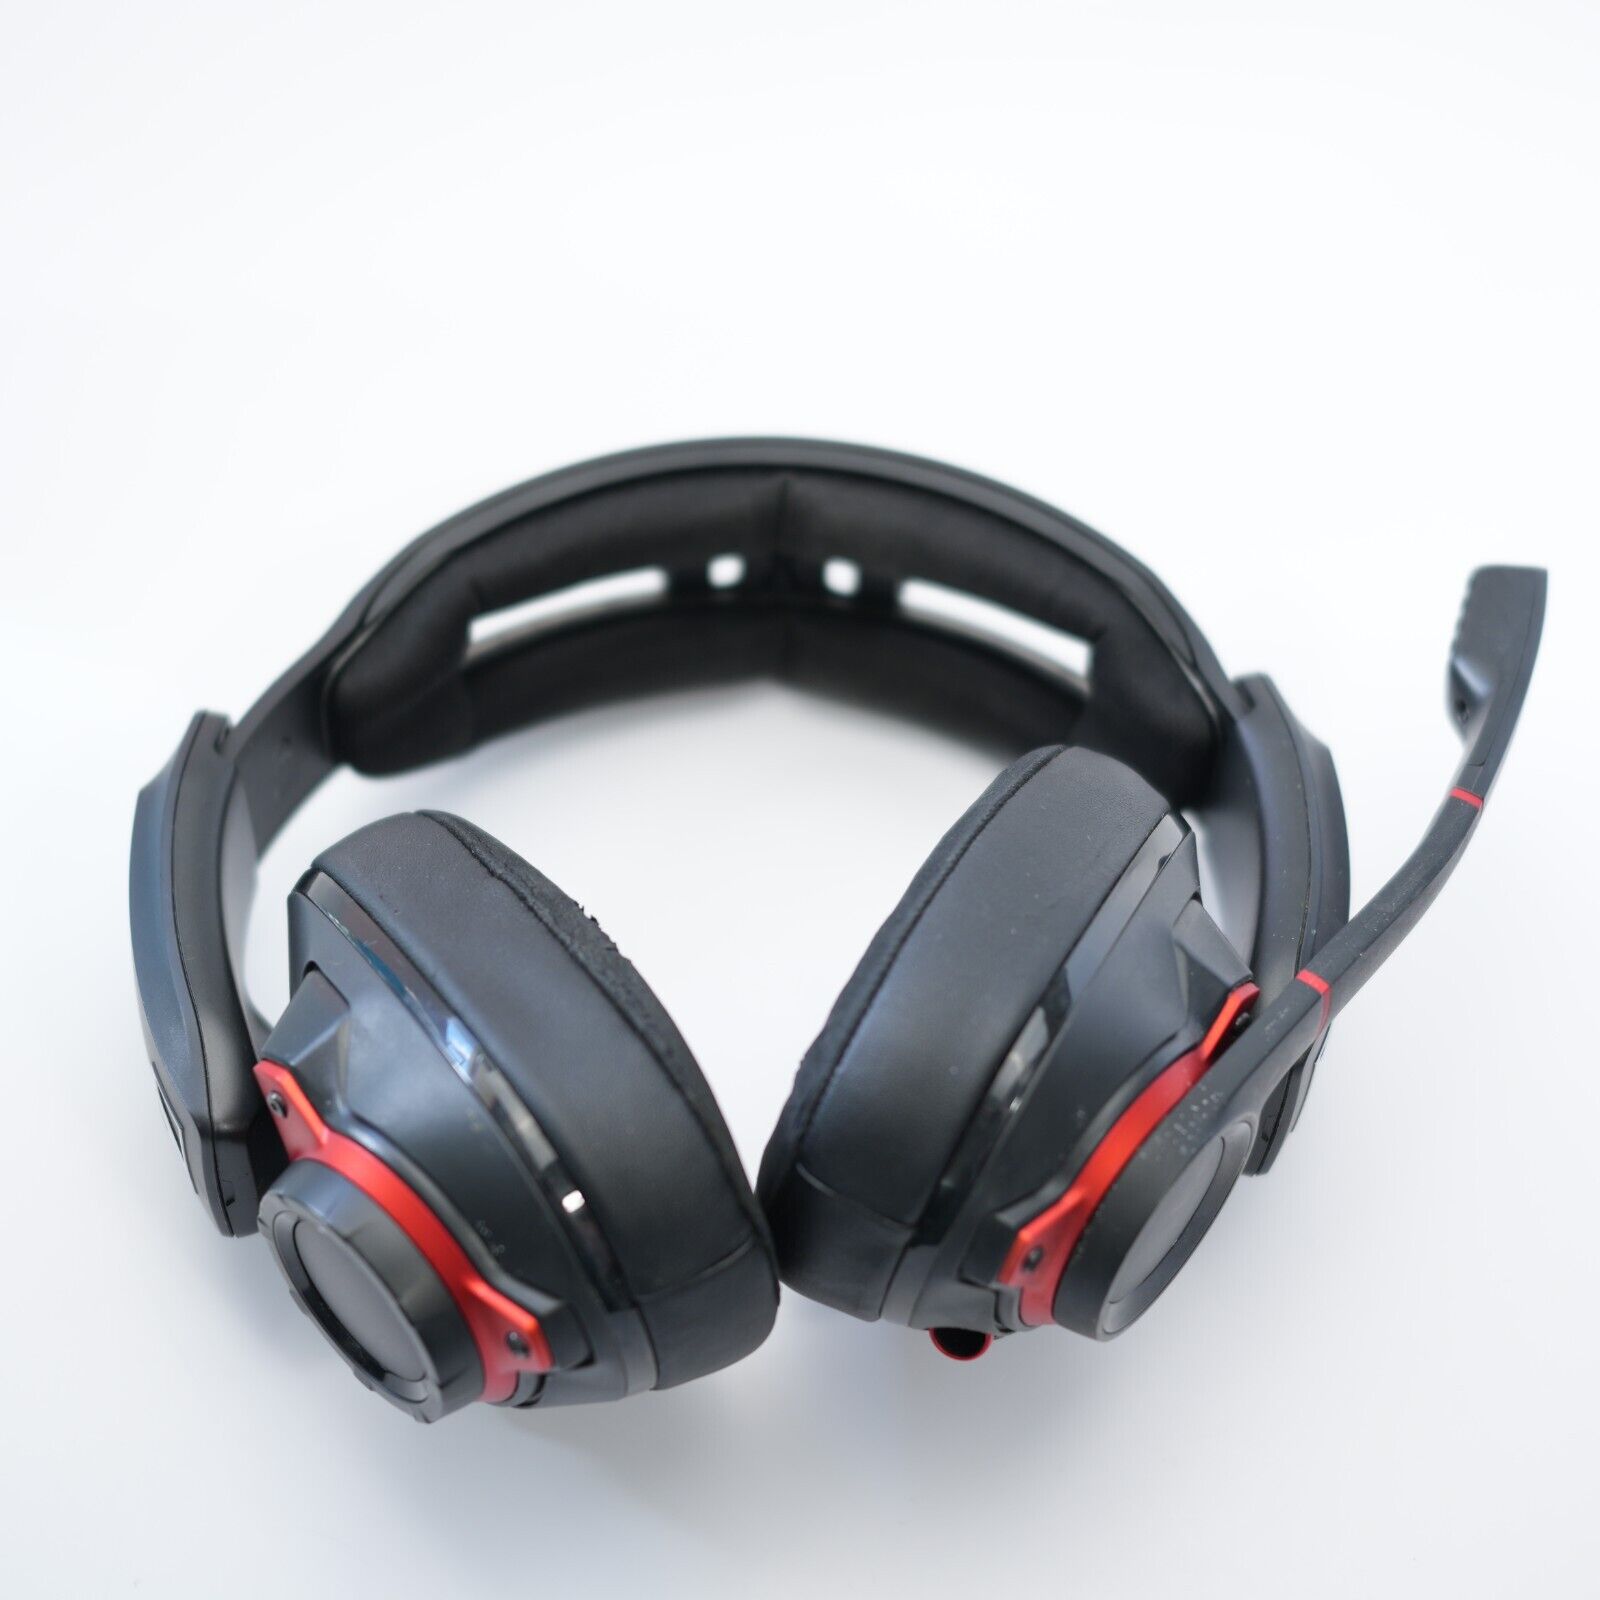 Sennheiser GSP 600 Professional Noise-Canceling Gaming Headset Black